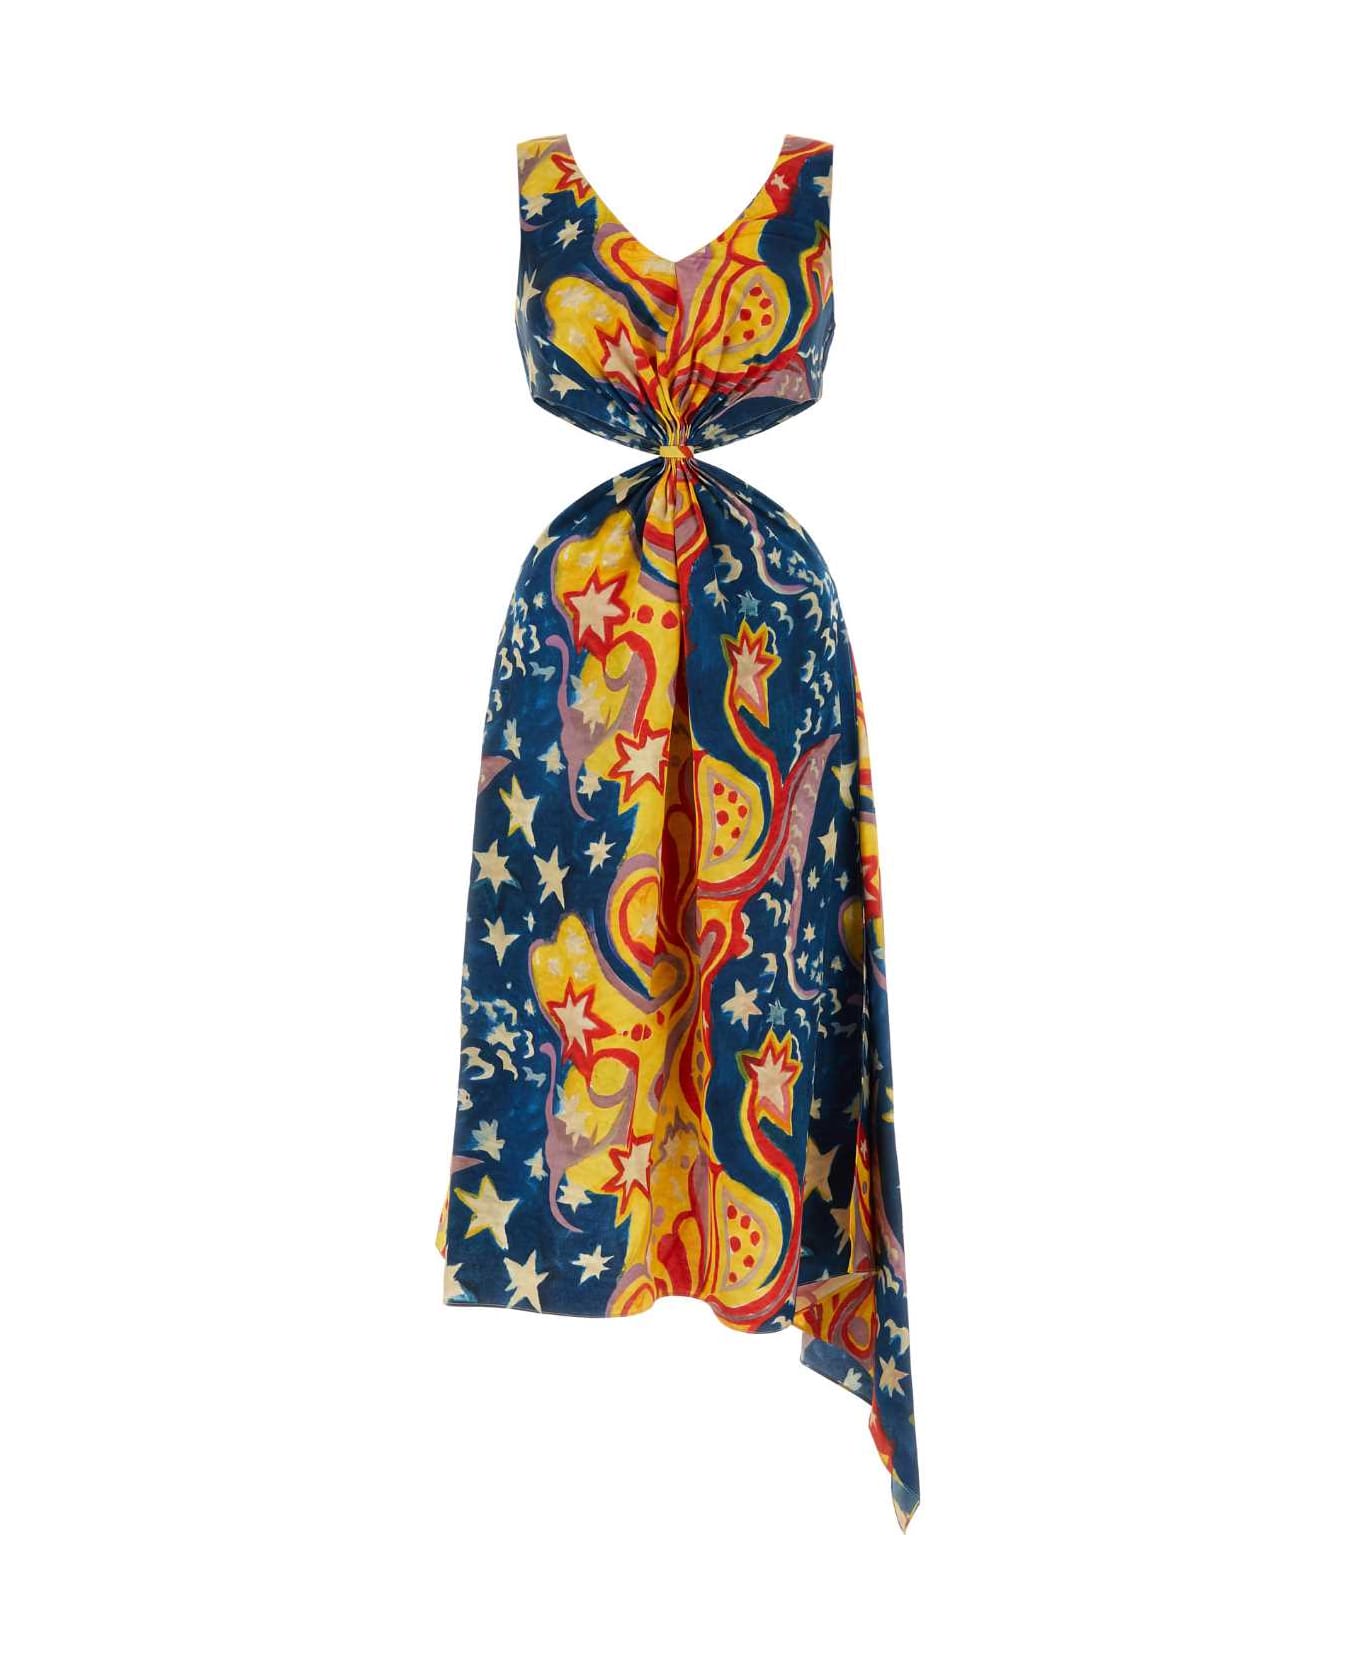 Marni Printed Satin Dress - GPB56